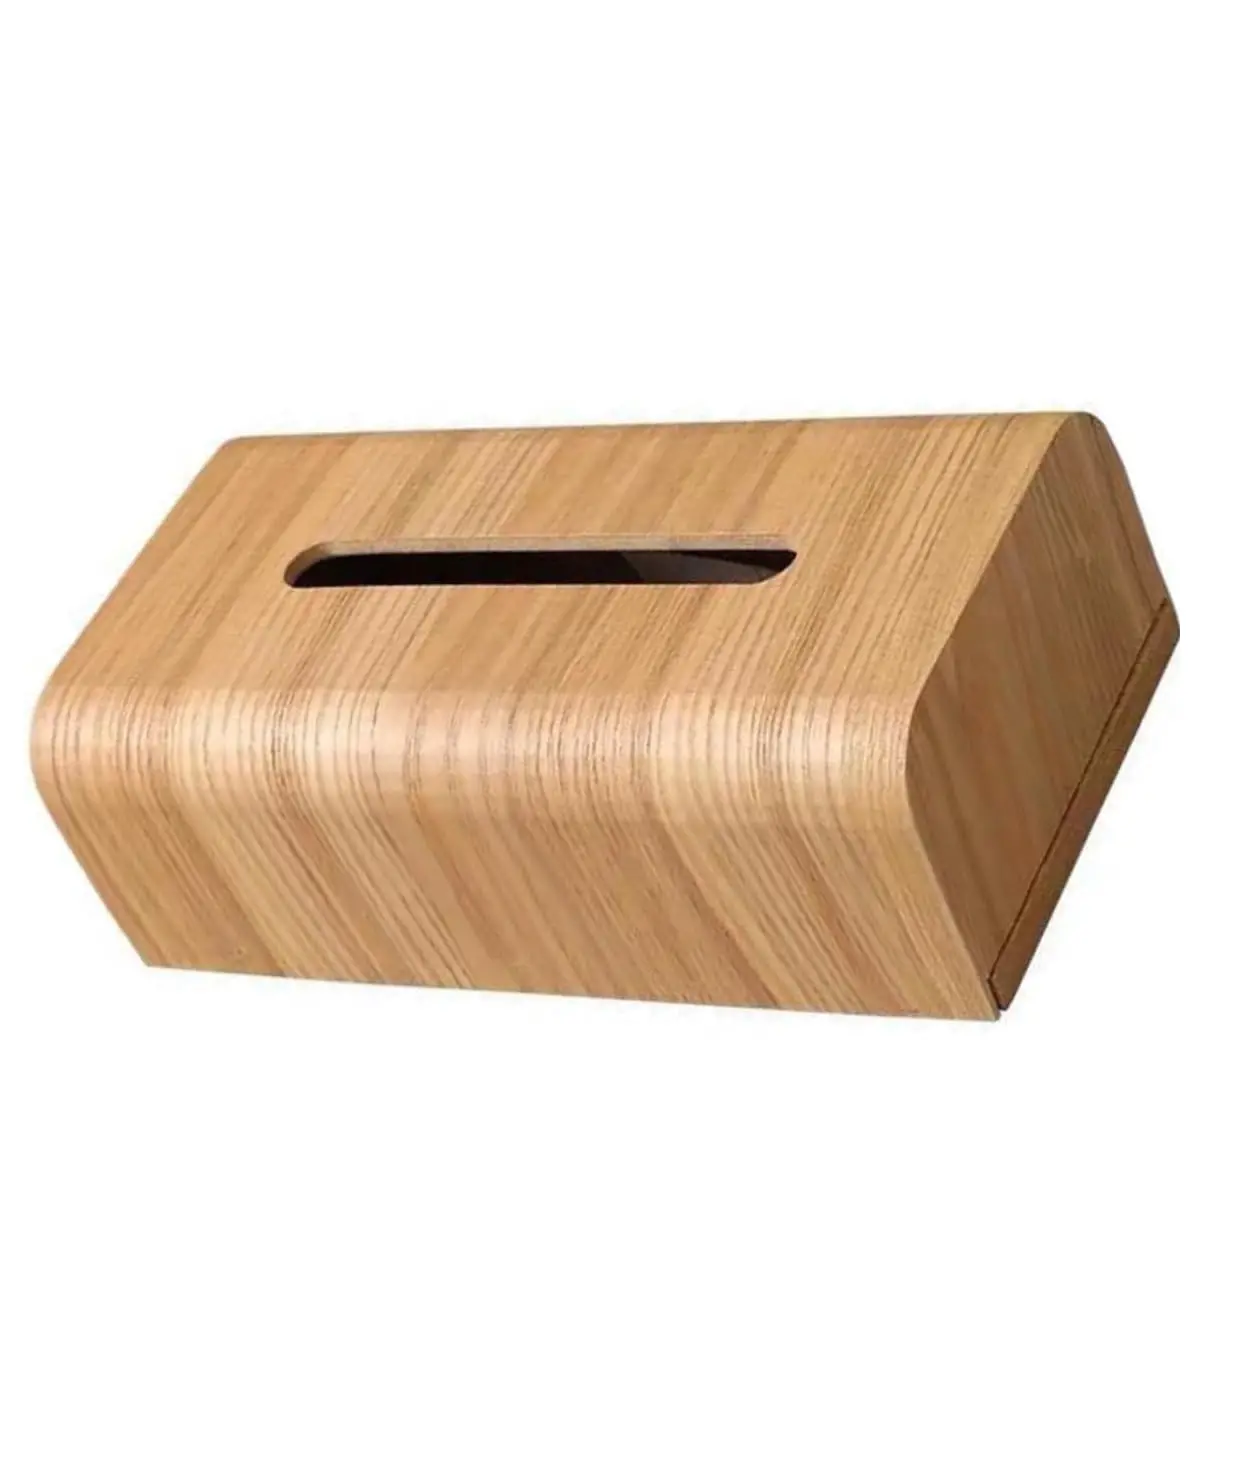 1 PC Box Wooden Tissue Box Japanese Desk Top Wooden Facial Tissue Cover Napkin Organizer Box